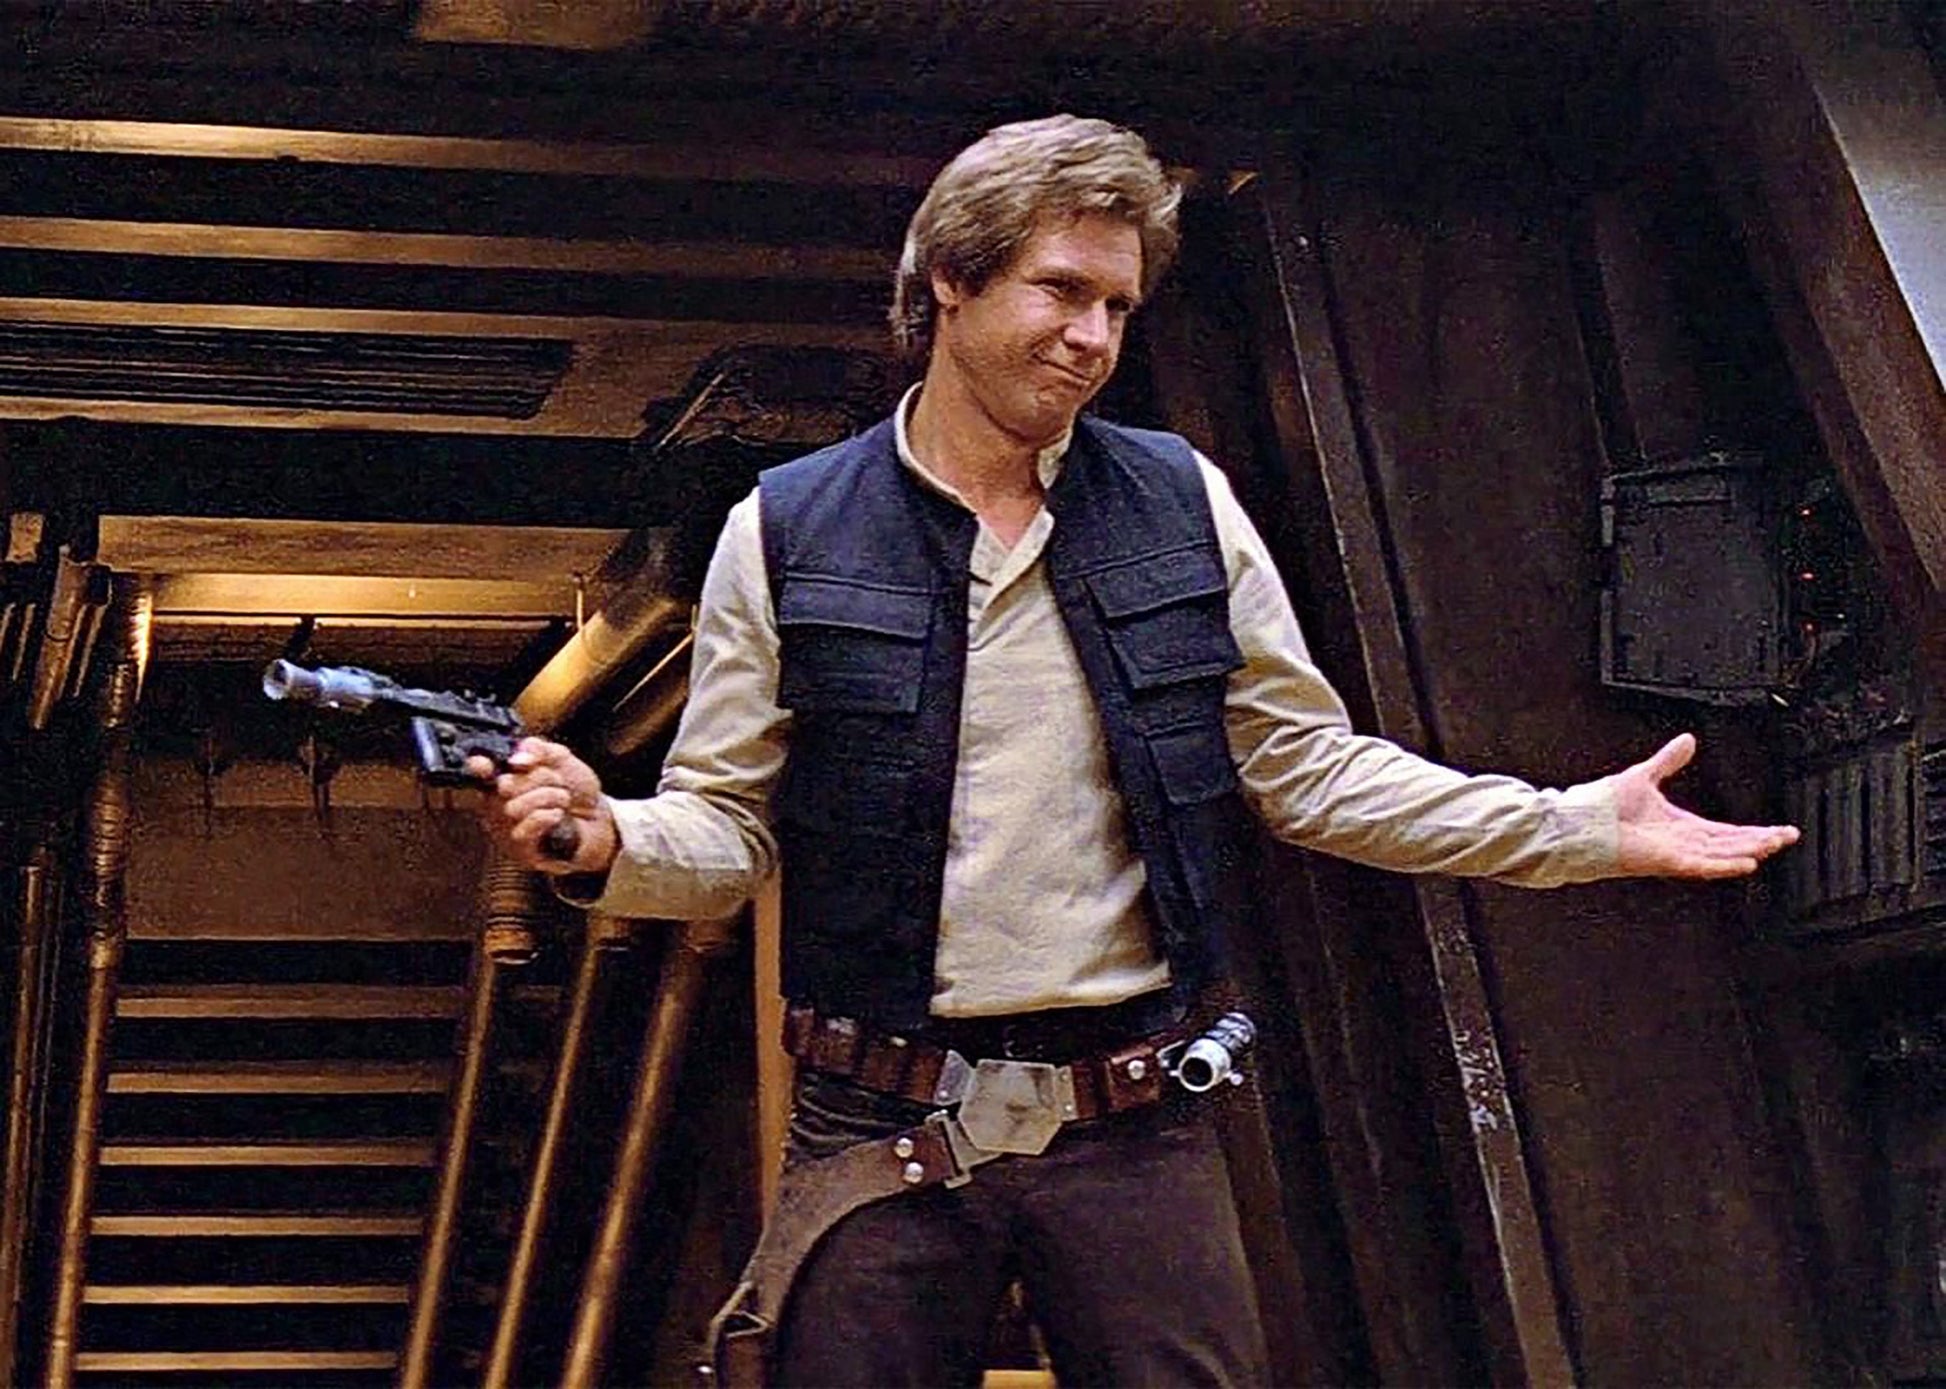 Star Wars Han Solo Droid Caller Prop Replica Cosplay Unit Device